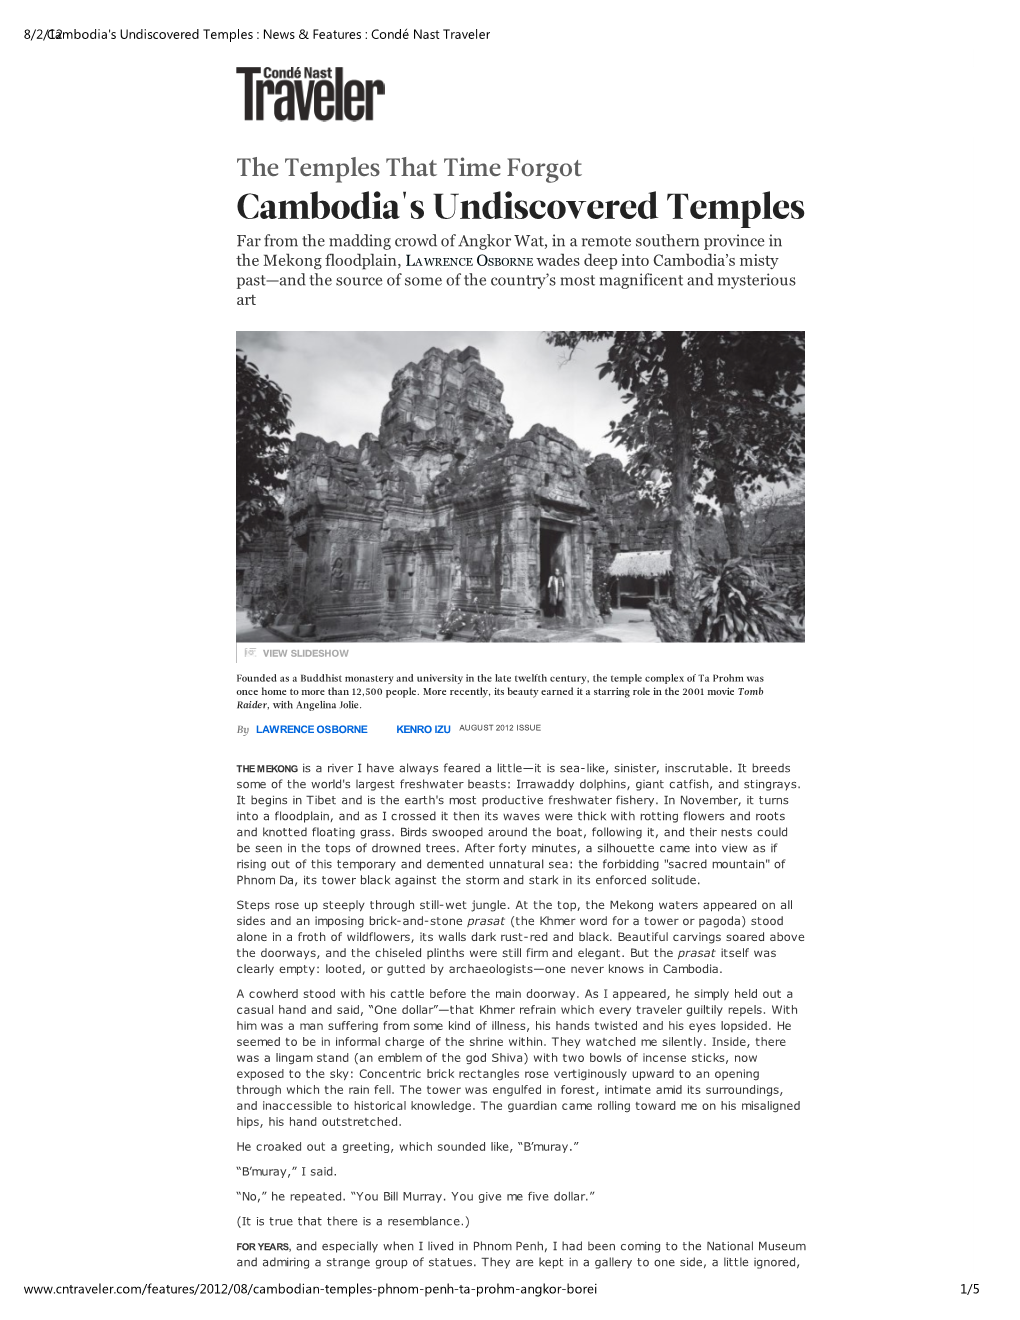 Cambodia's Undiscovered Temples